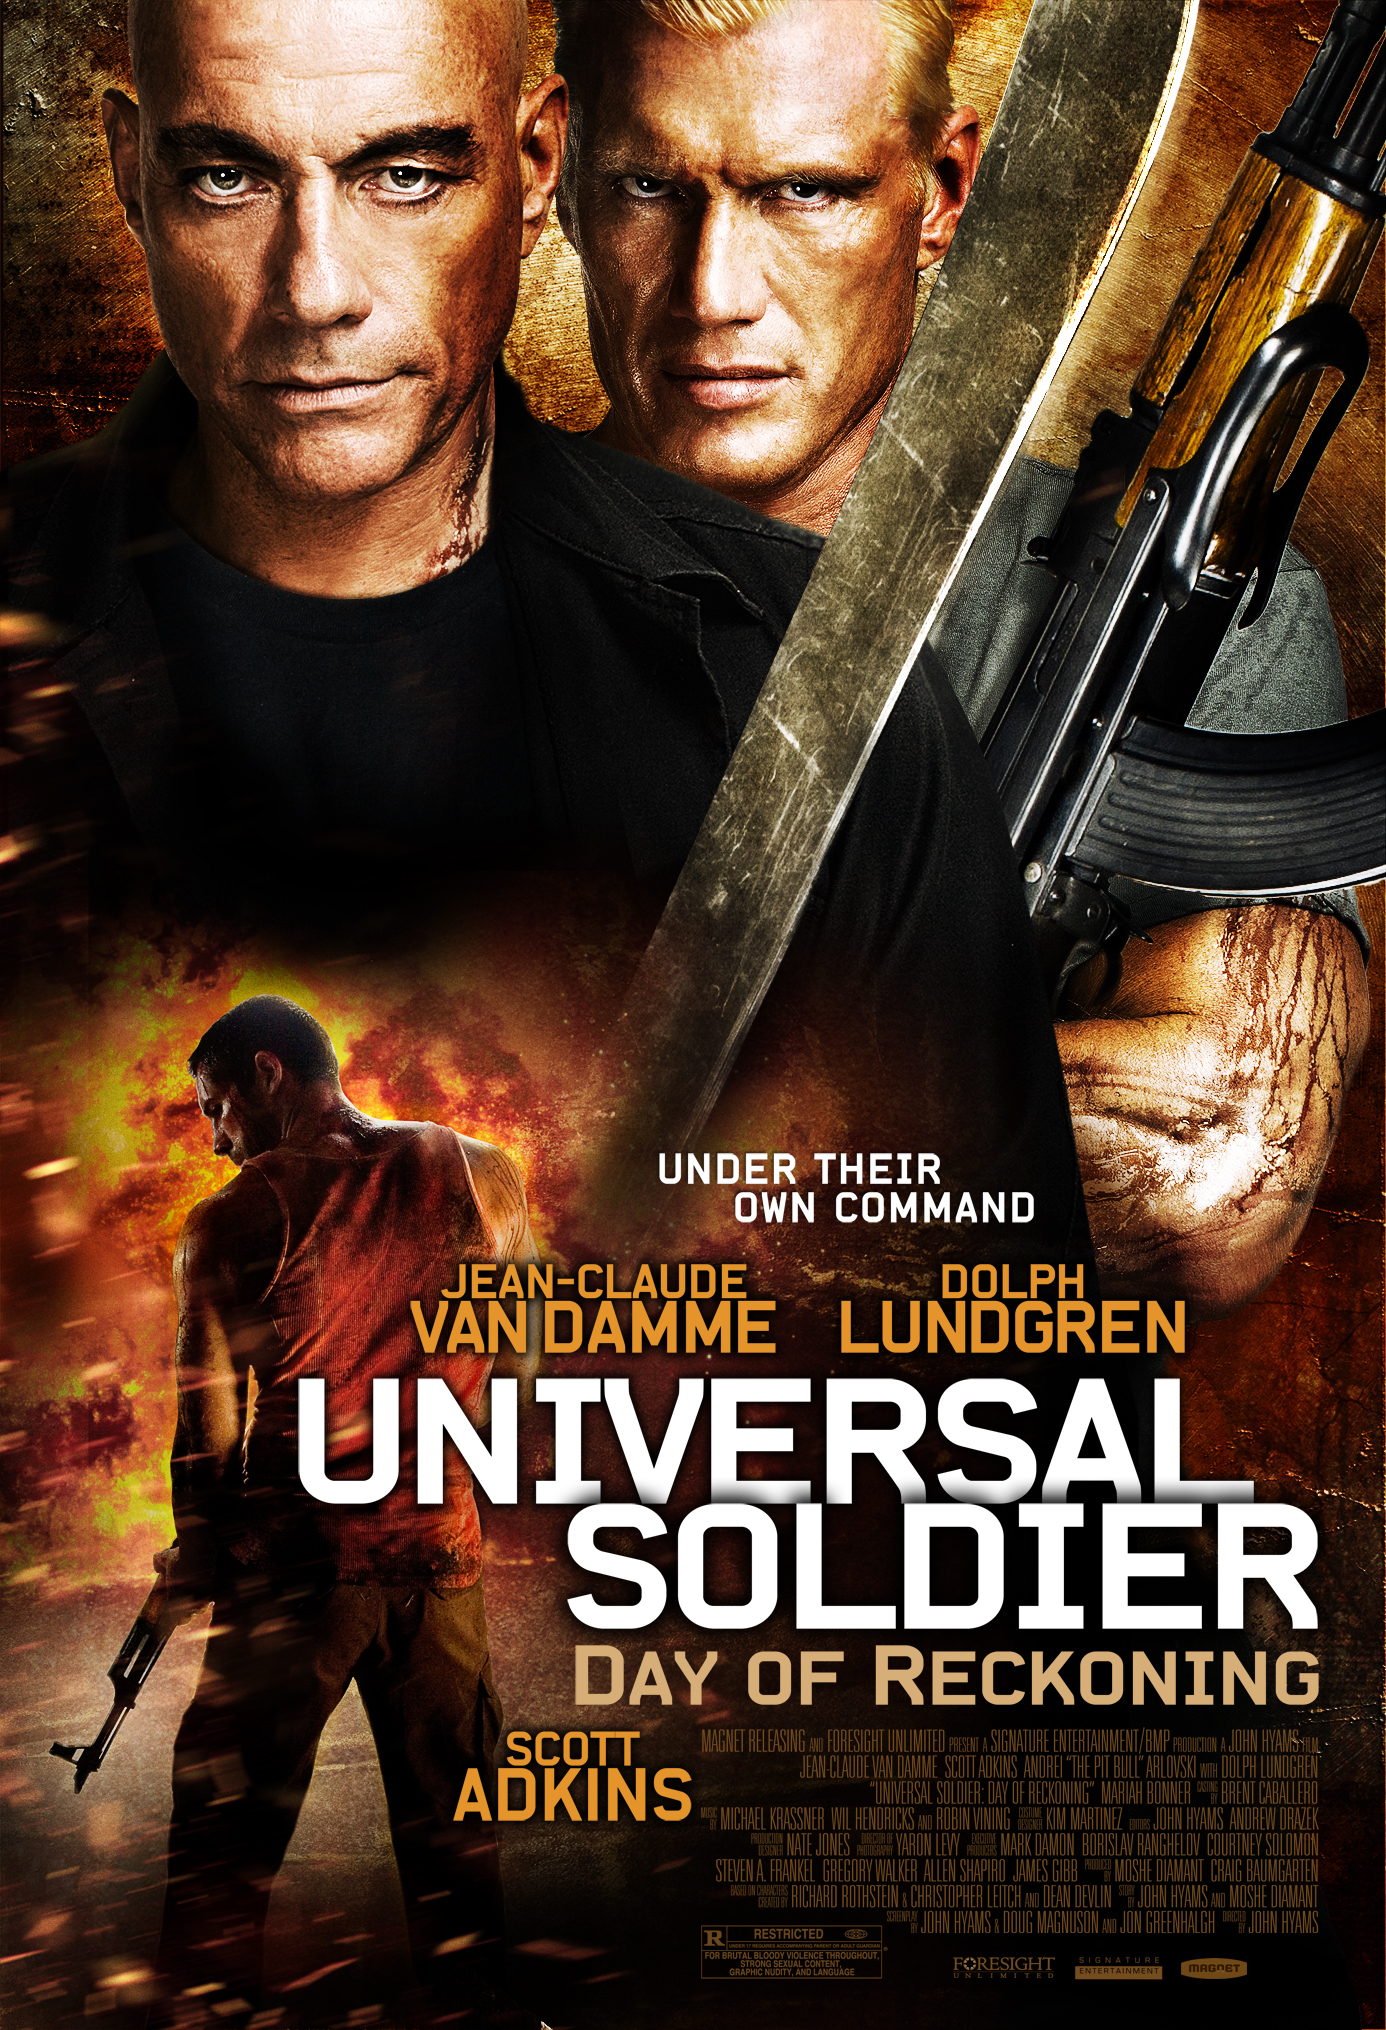 Universal Soldier: Day of Reckoning (2012) 2 คนไม่ใช่คน 4 สงครามวันดับแค้น Jean-Claude Van Damme